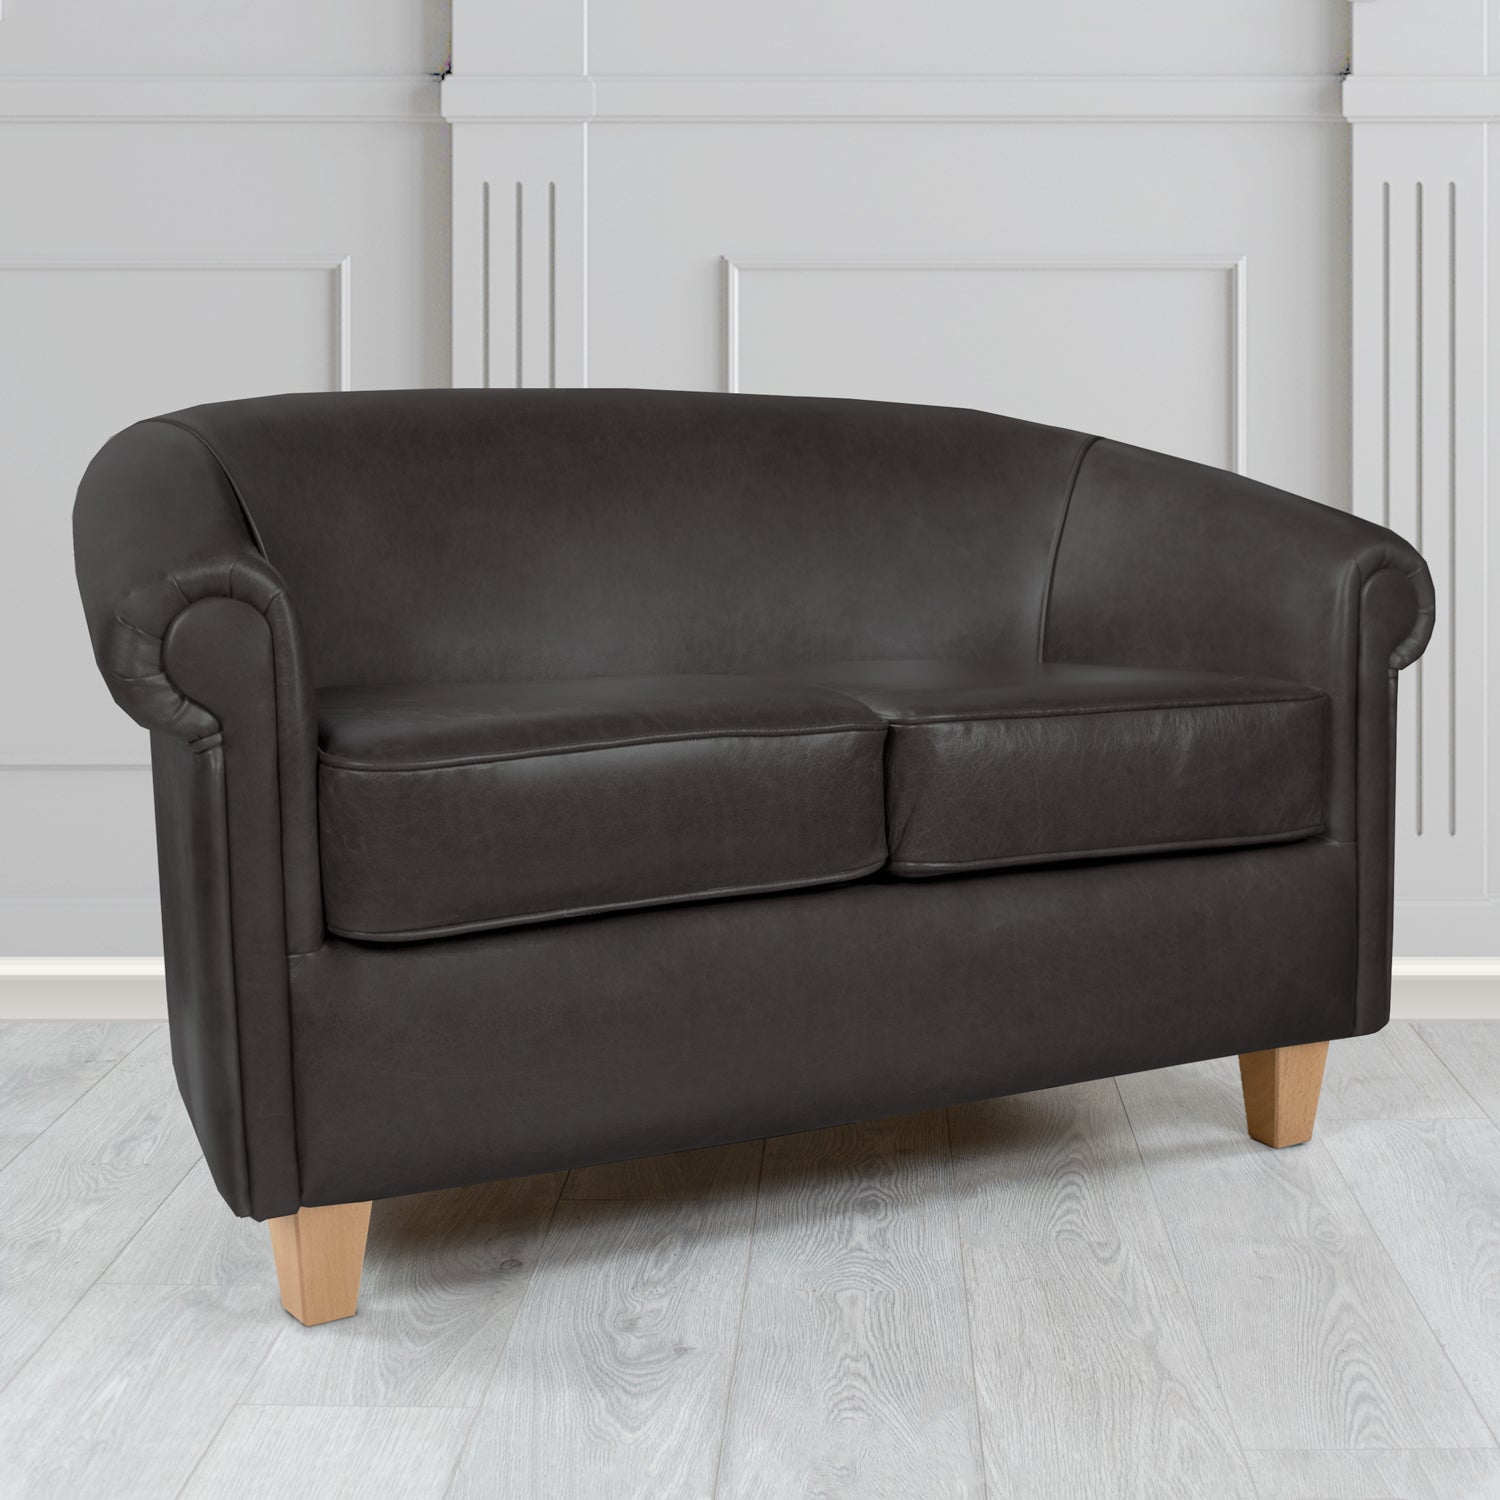 Siena 2 Seater Tub Sofa in Crib 5 Old English Black Genuine Leather - The Tub Chair Shop